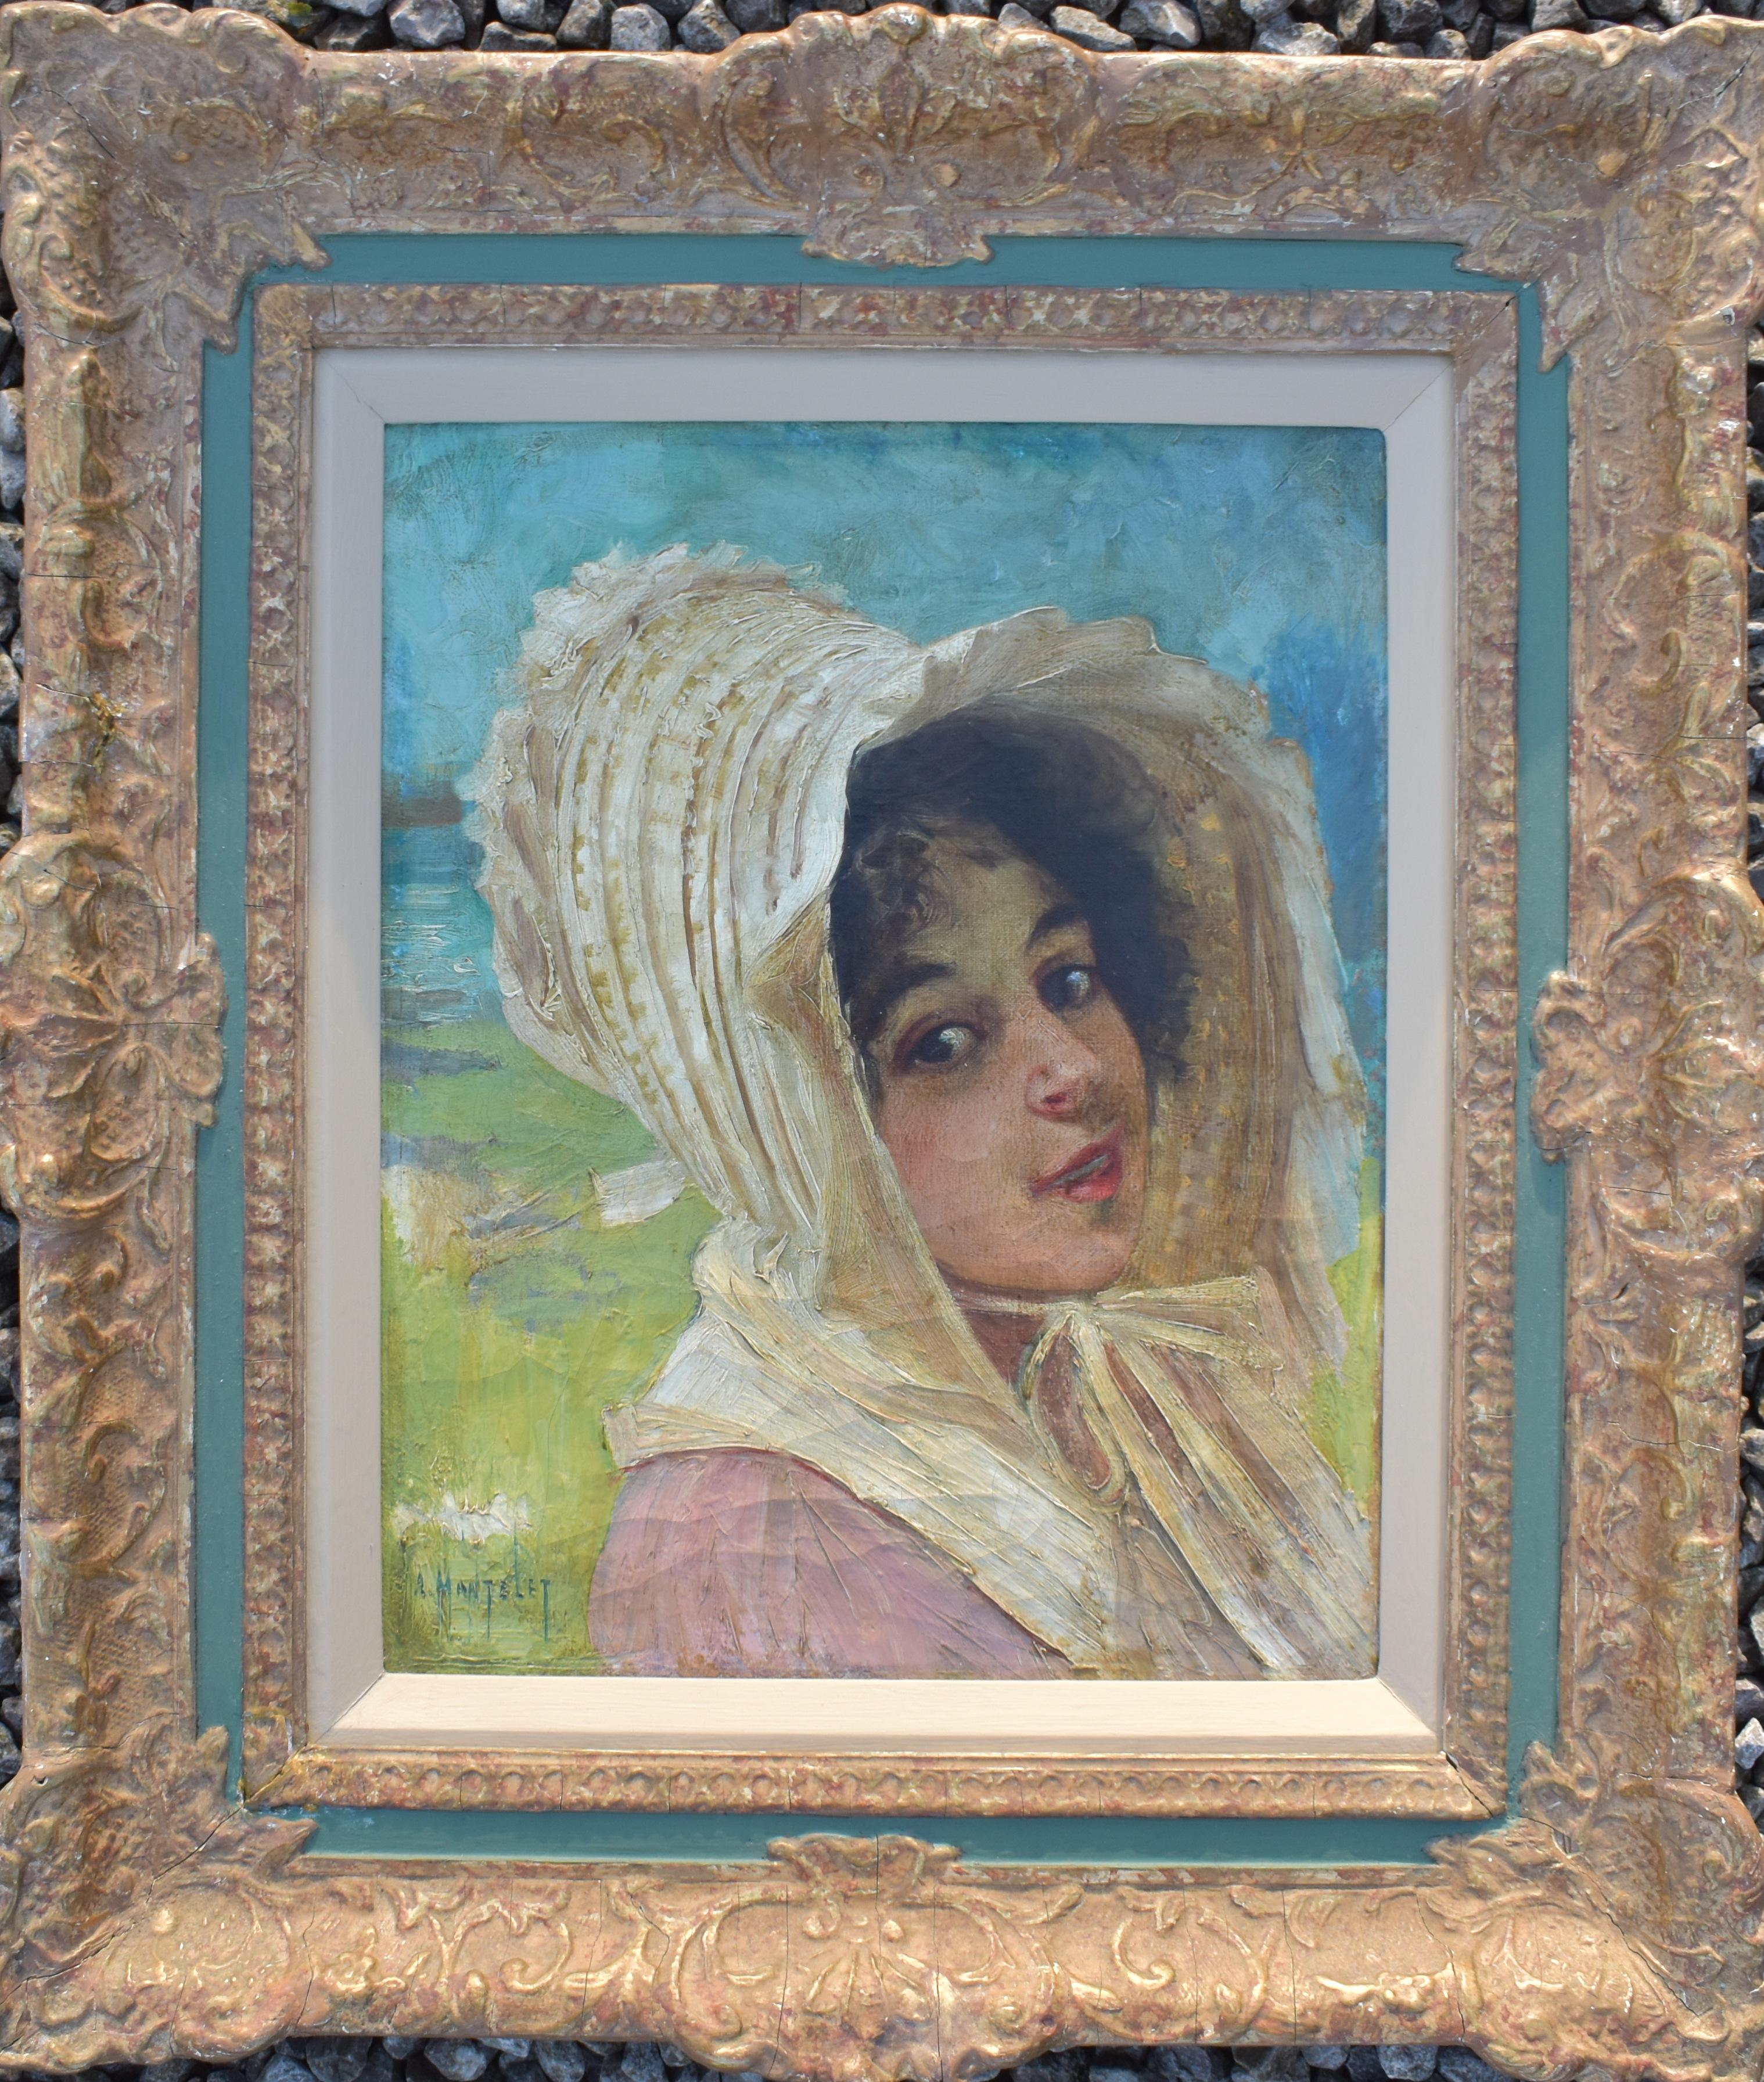 MANTELET Albert Portrait Painting - Albert MANTELET (1858-1958) French School c1900 Oil Painting